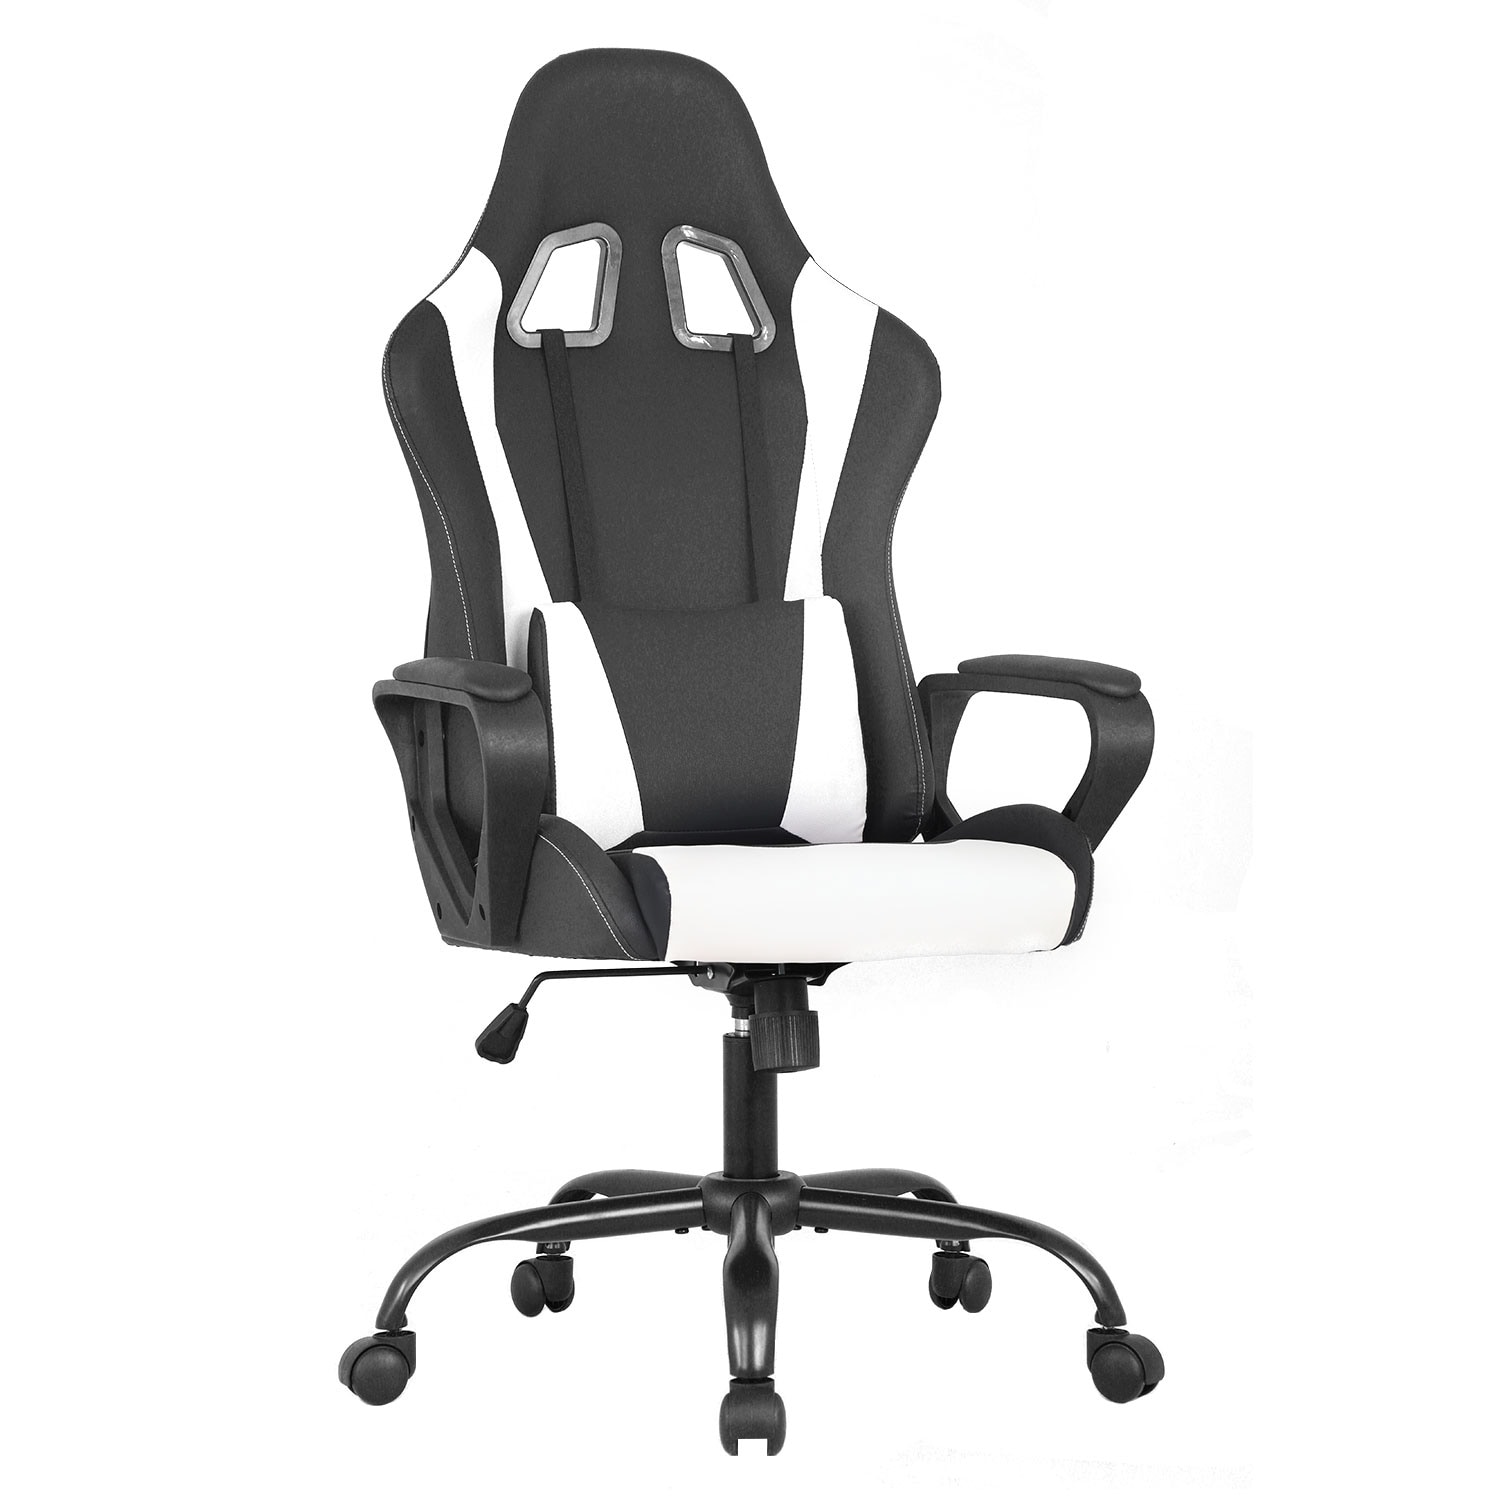 https://ak1.ostkcdn.com/images/products/is/images/direct/18fbc9fa439ec3ec45379de9b50d243bd625f6f7/Raze-Ergonomic-Adjustable-Reclining-Gaming-Chair-with-Lumbar-Pillow-by-Furniture-of-America.jpg